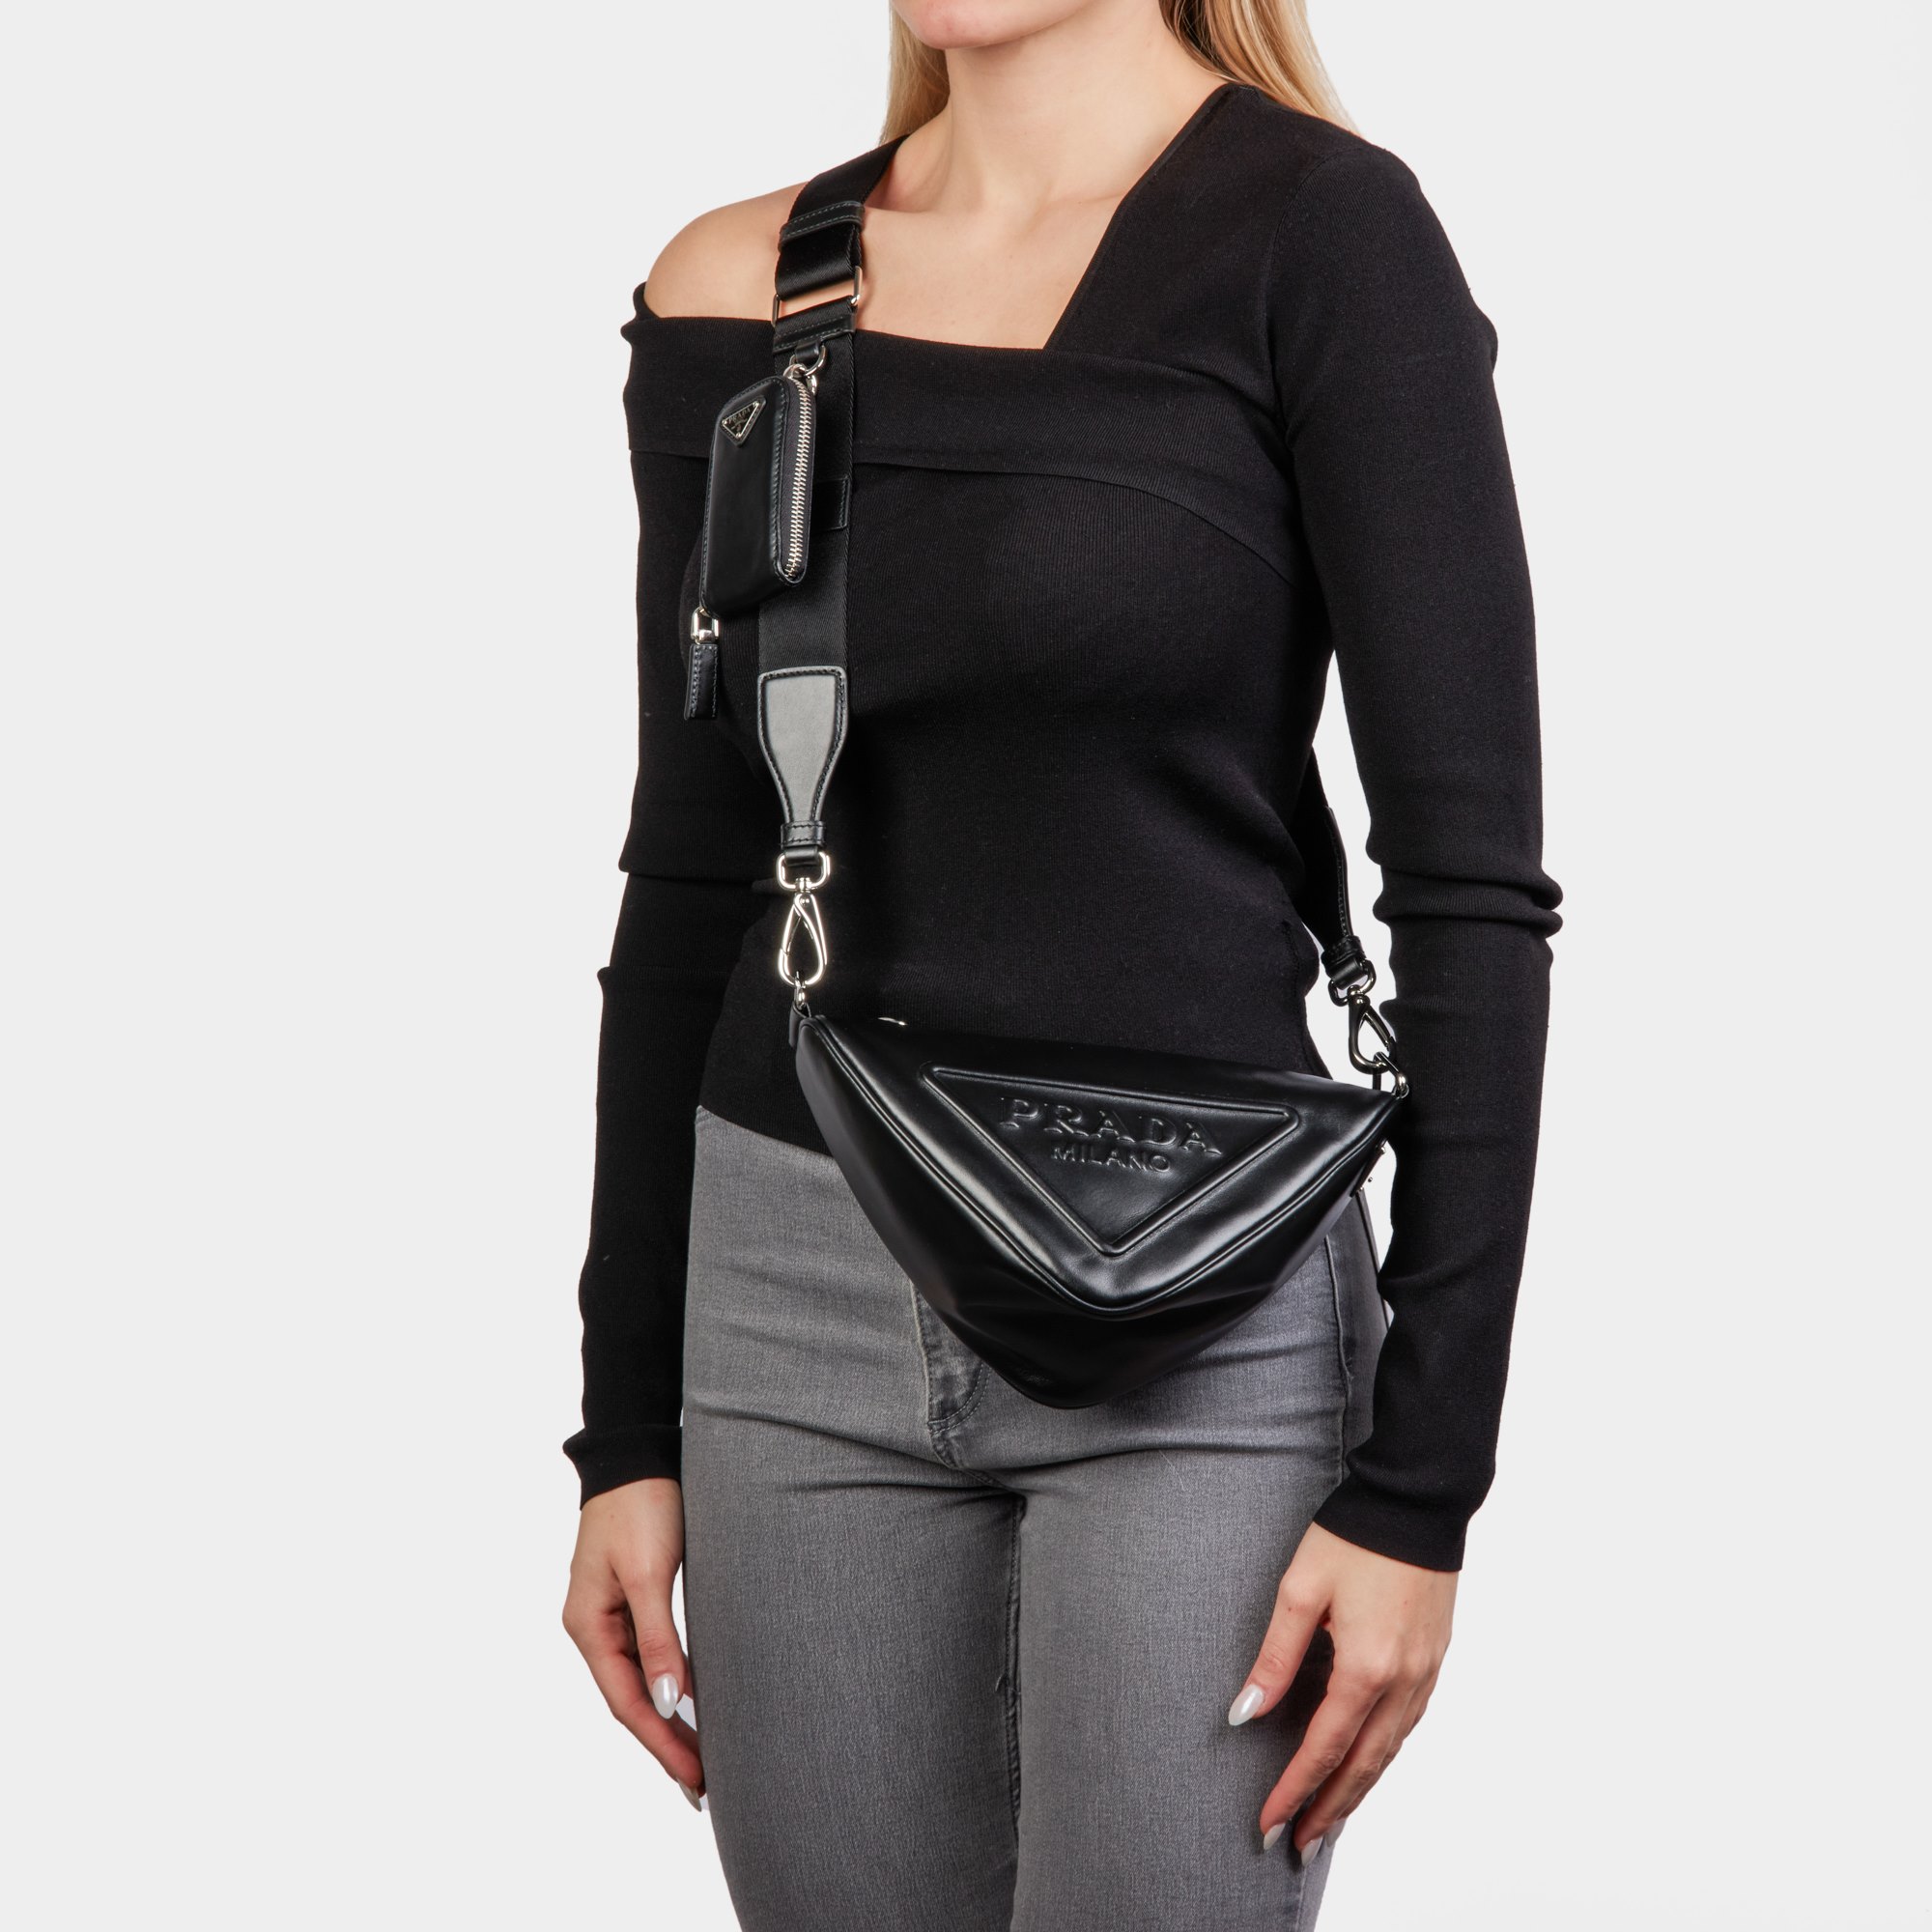 Prada Women's Triangle Leather Shoulder Bag